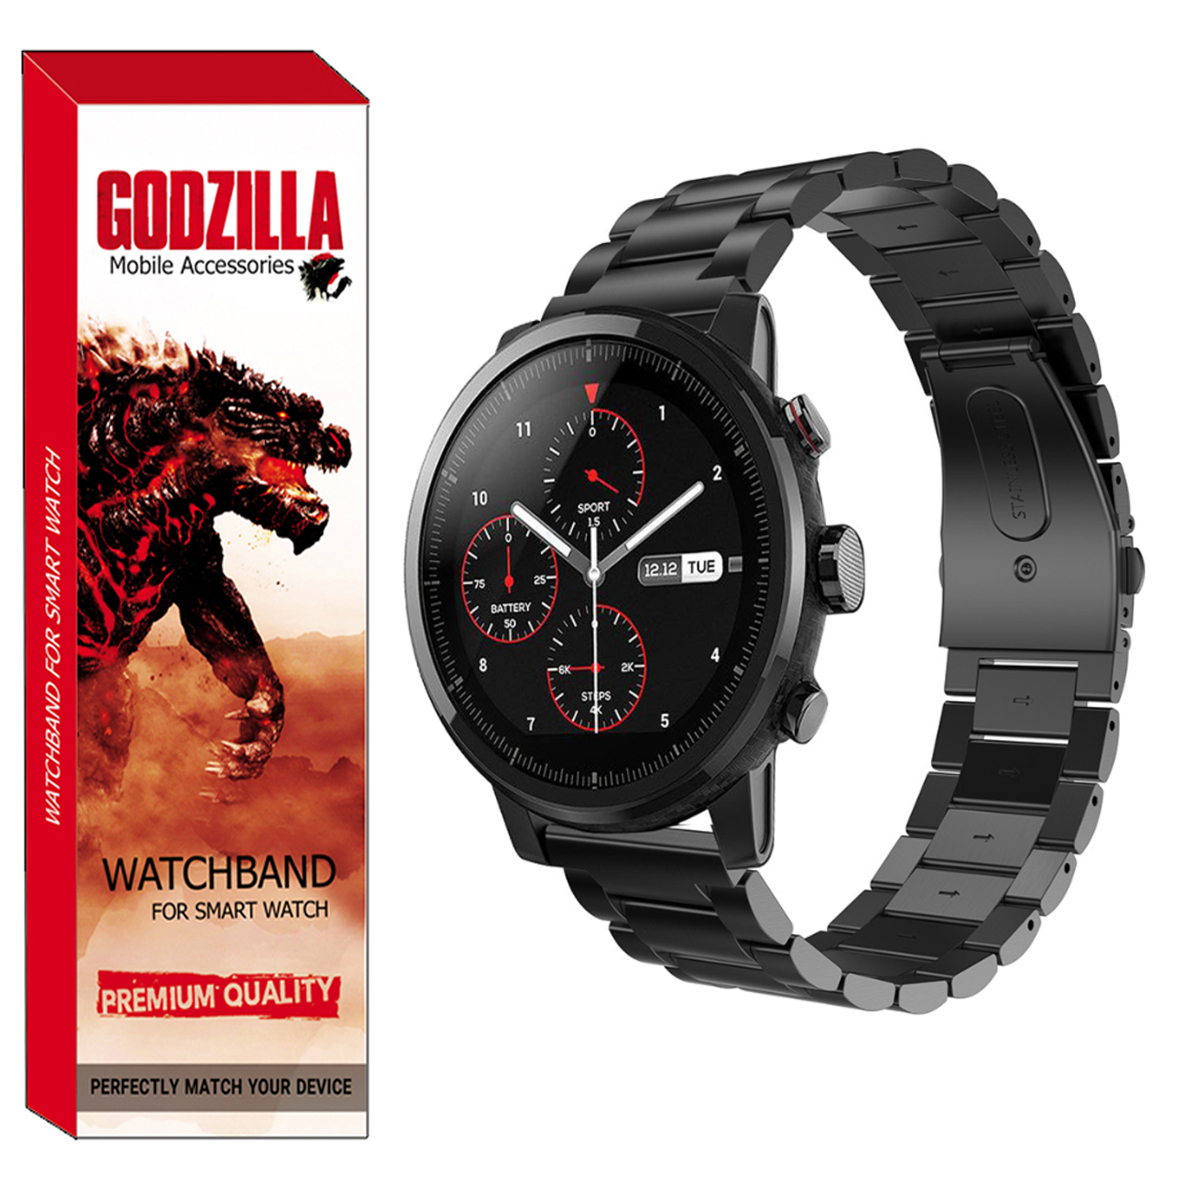 بند گودزیلا مدل 3BID مناسب برای ساعت هوشمند میبرو Watch X1 / Watch A1